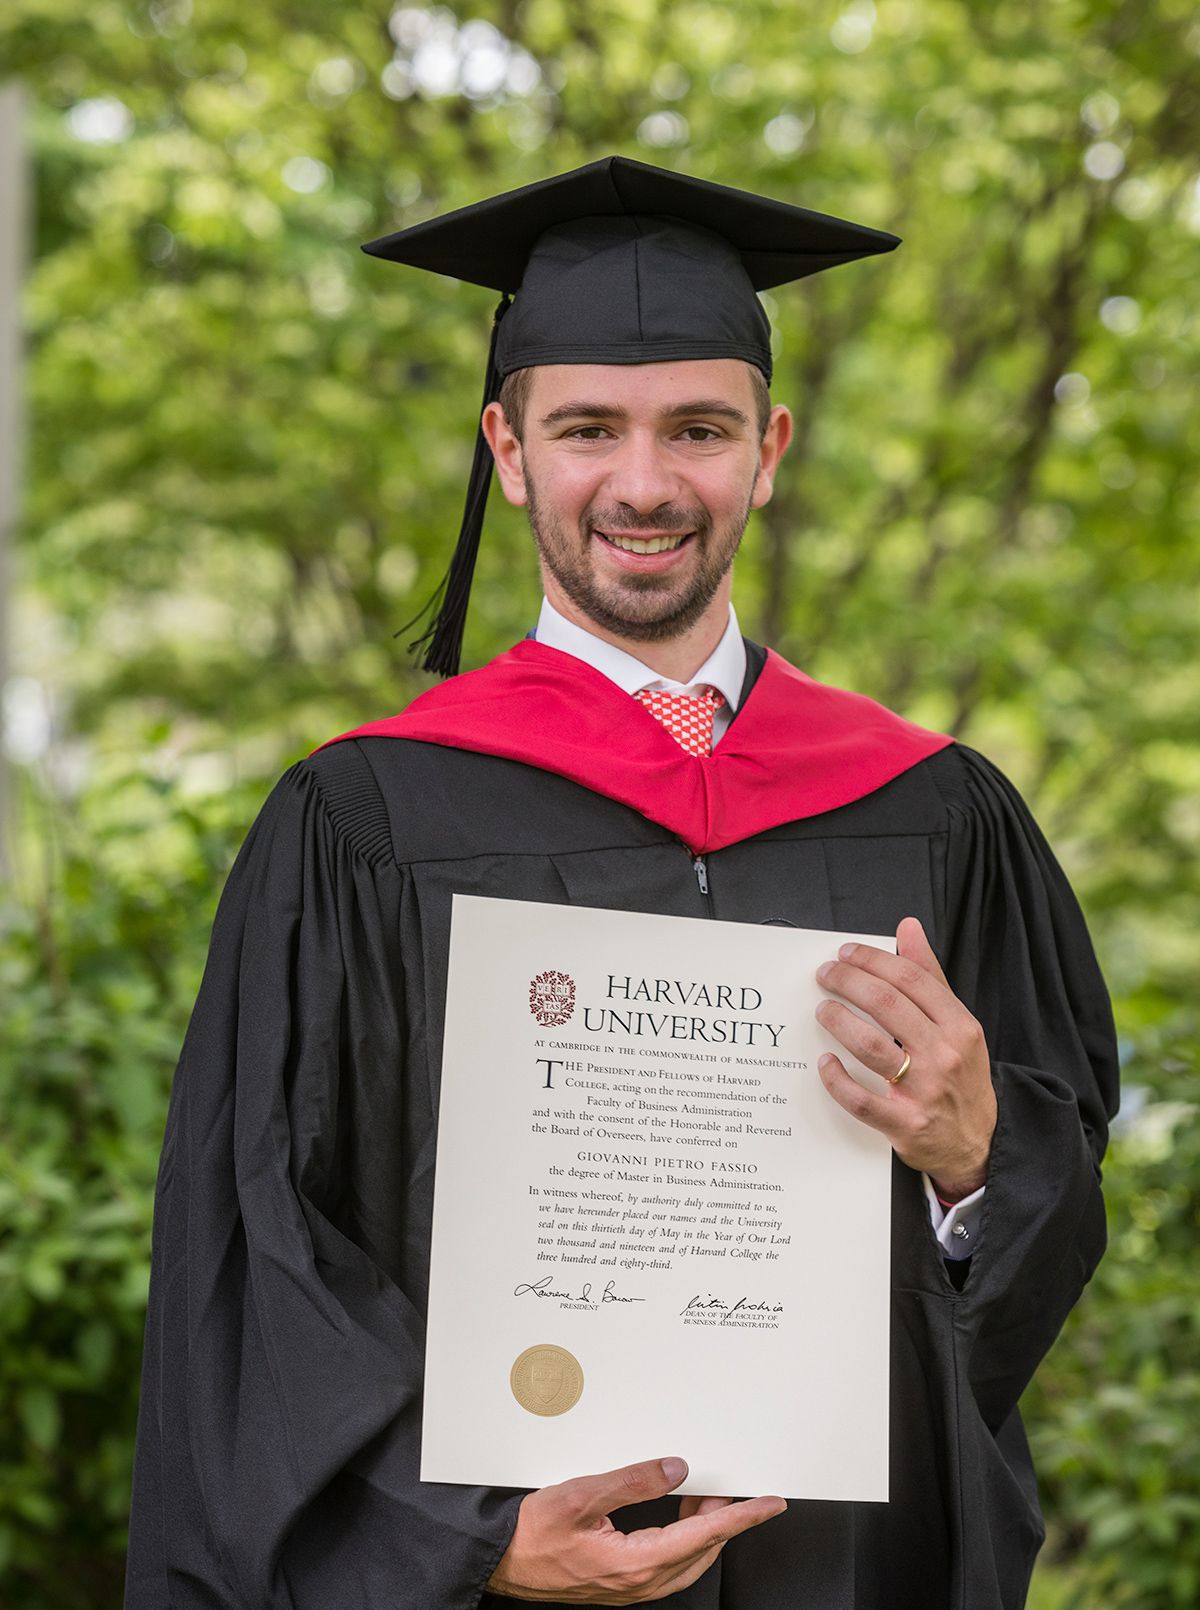 Harvard's Graduation